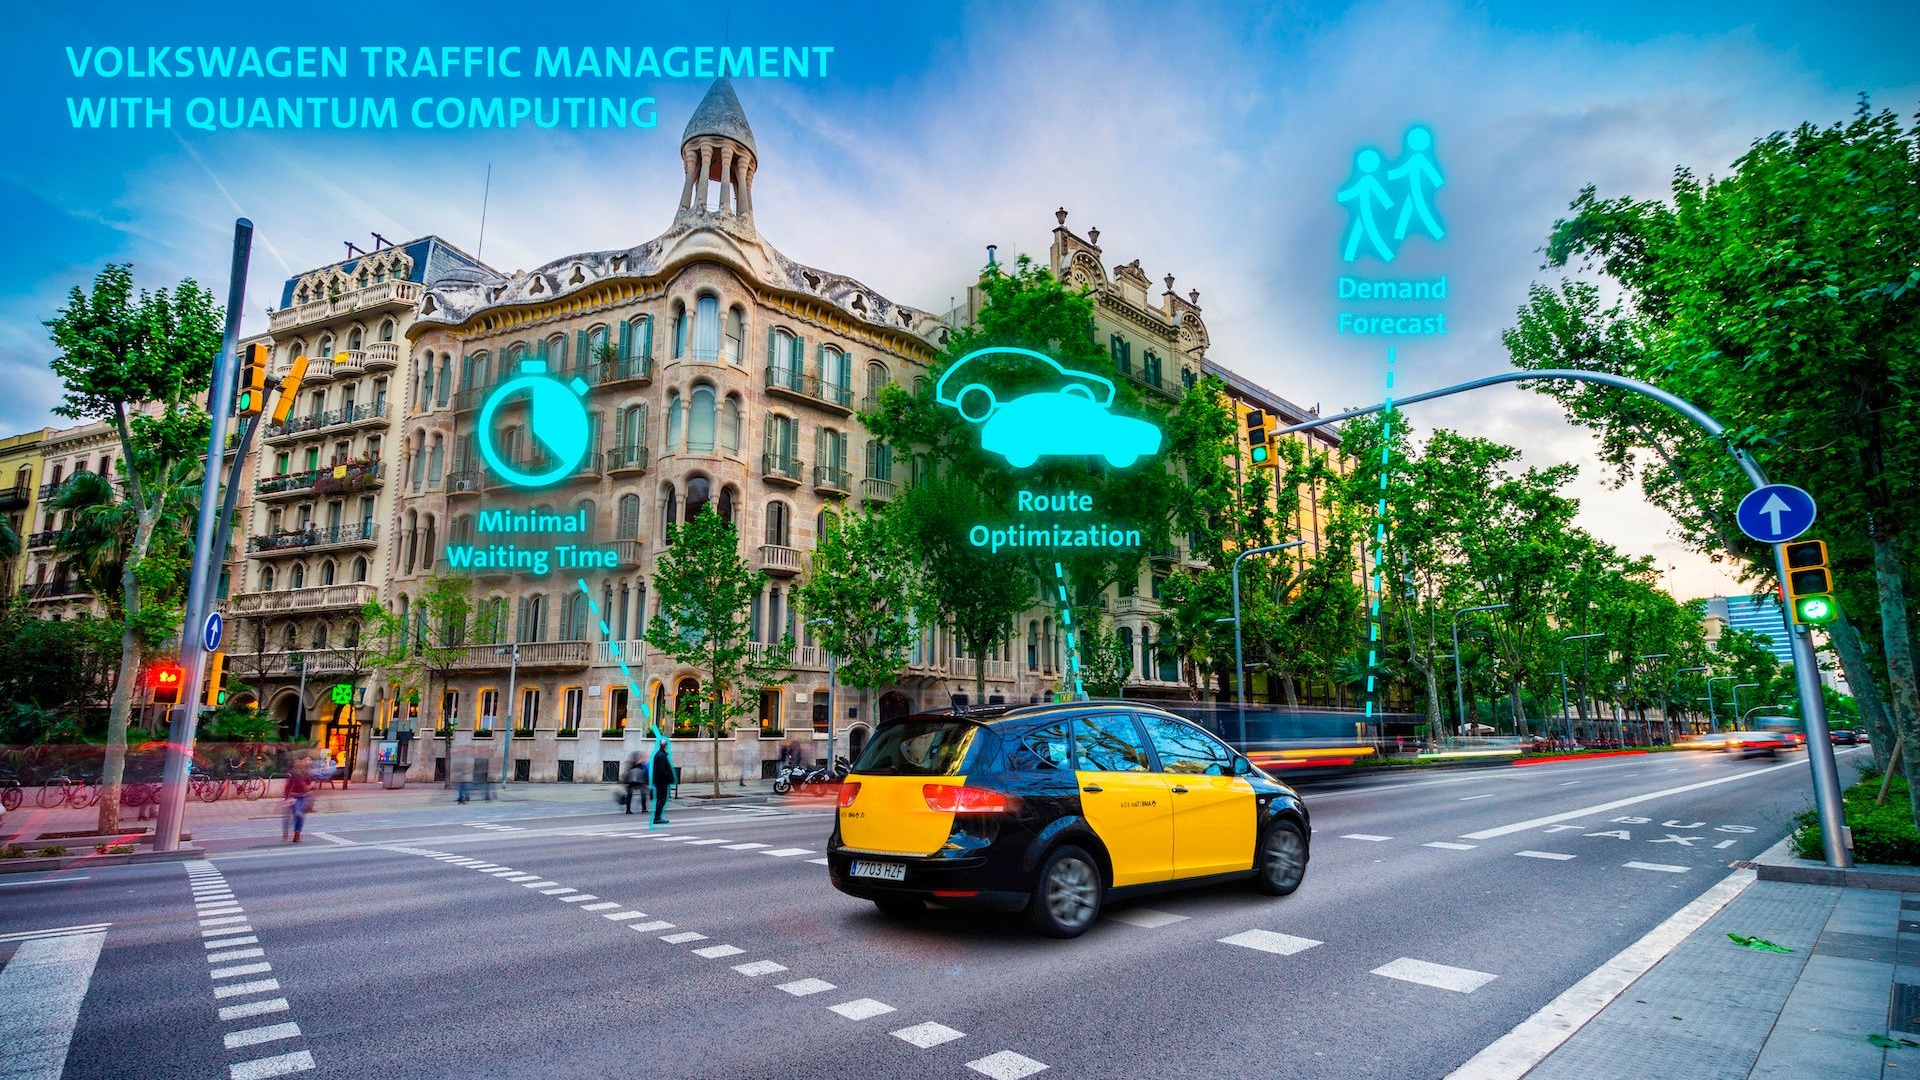 VW quantum computer traffic management system